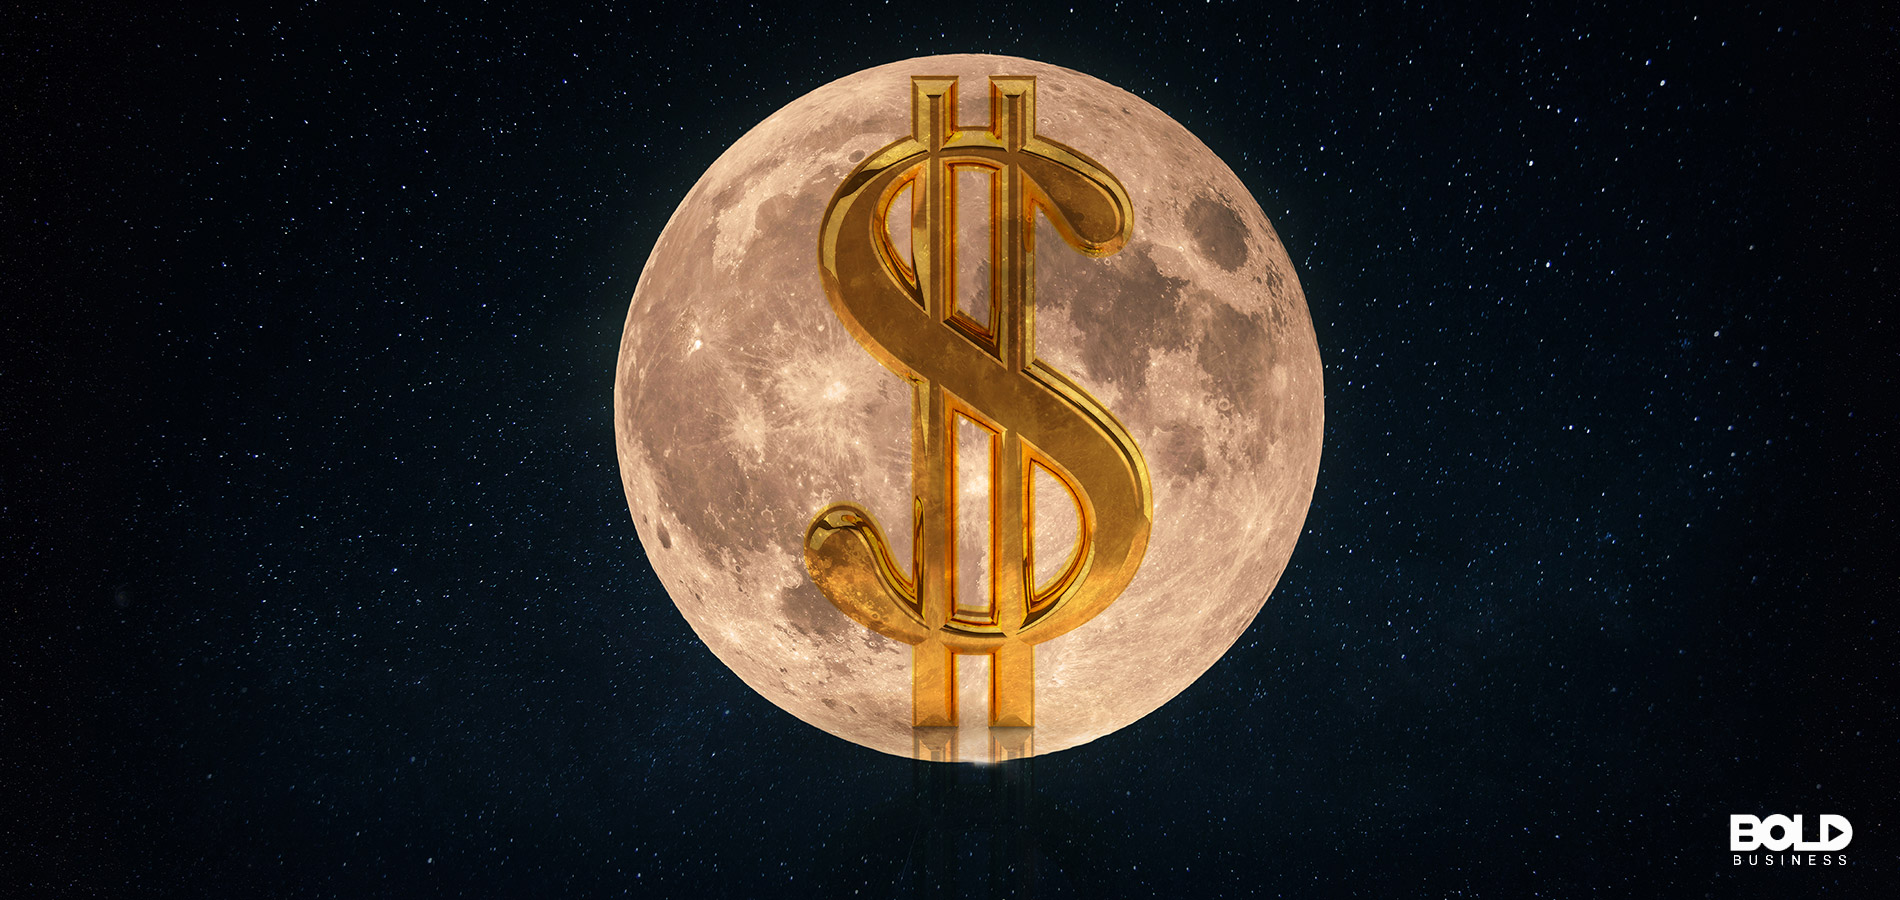 potential lunar commercial activities mean more money